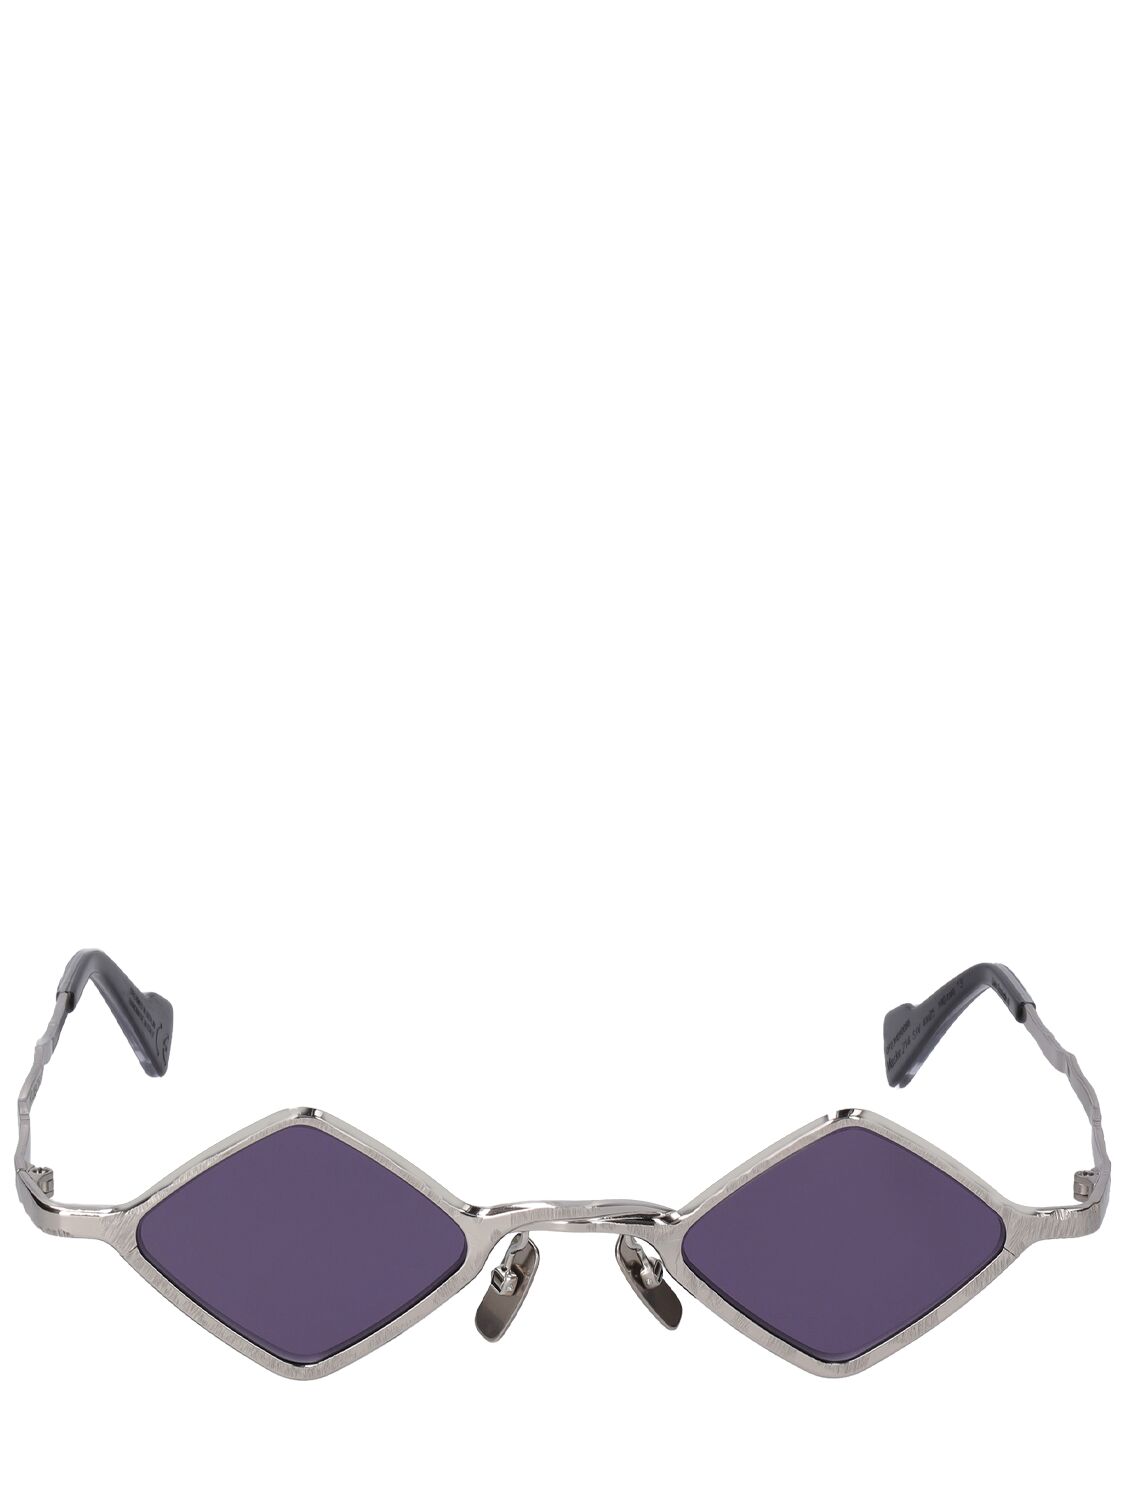 Kuboraum Berlin Z14 Squared Metal Sunglasses In Silver